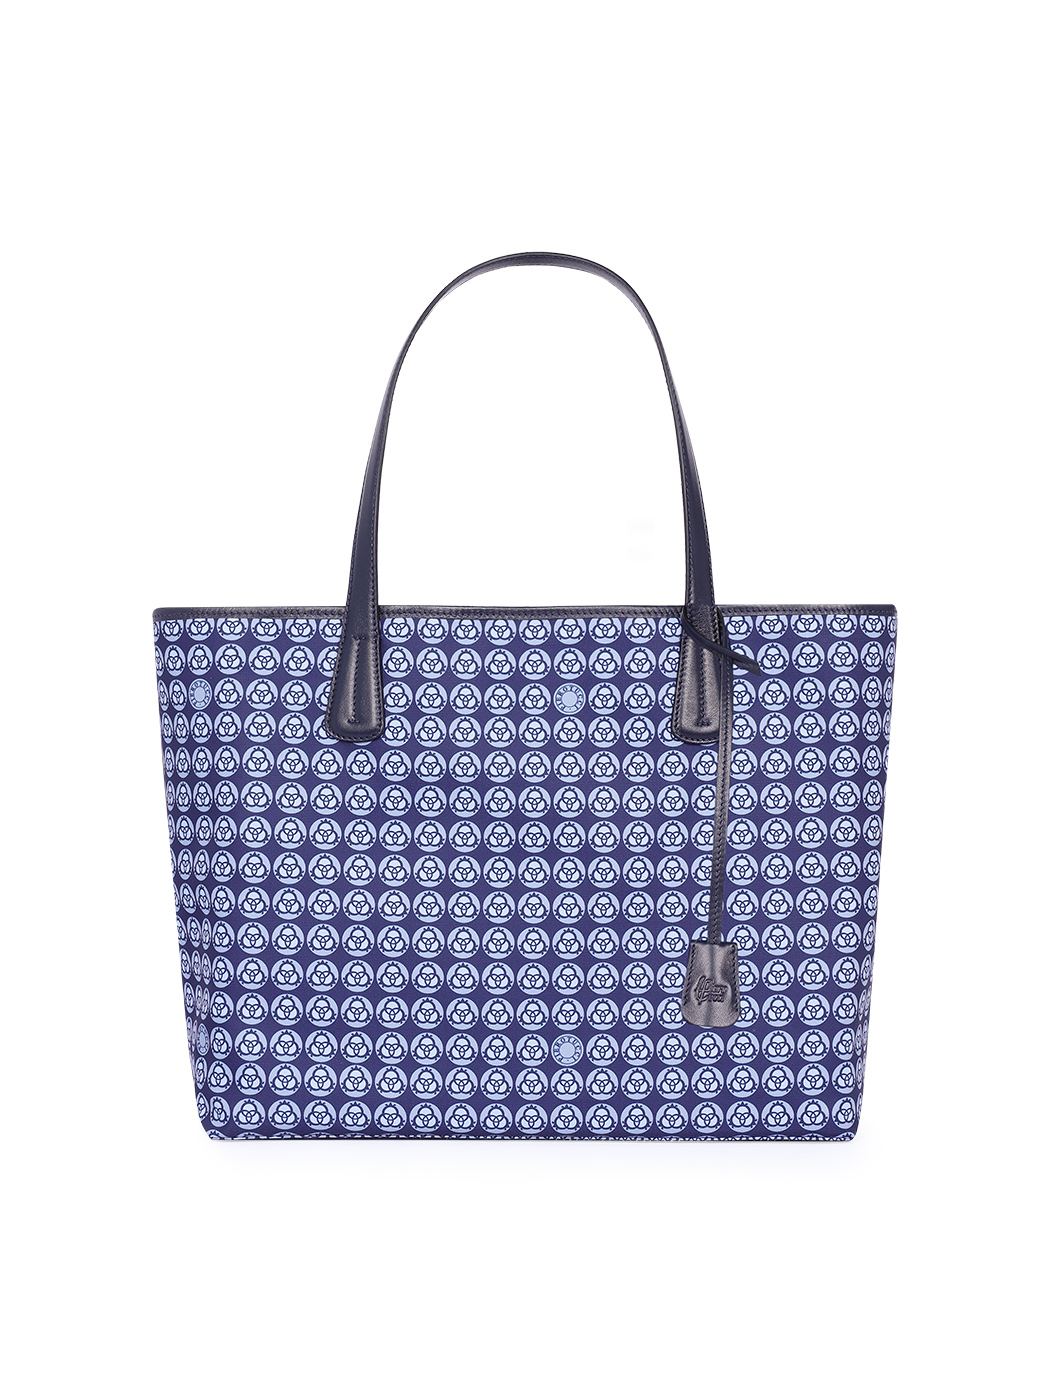 Легкая сумка-шоппер темно-синего цвета